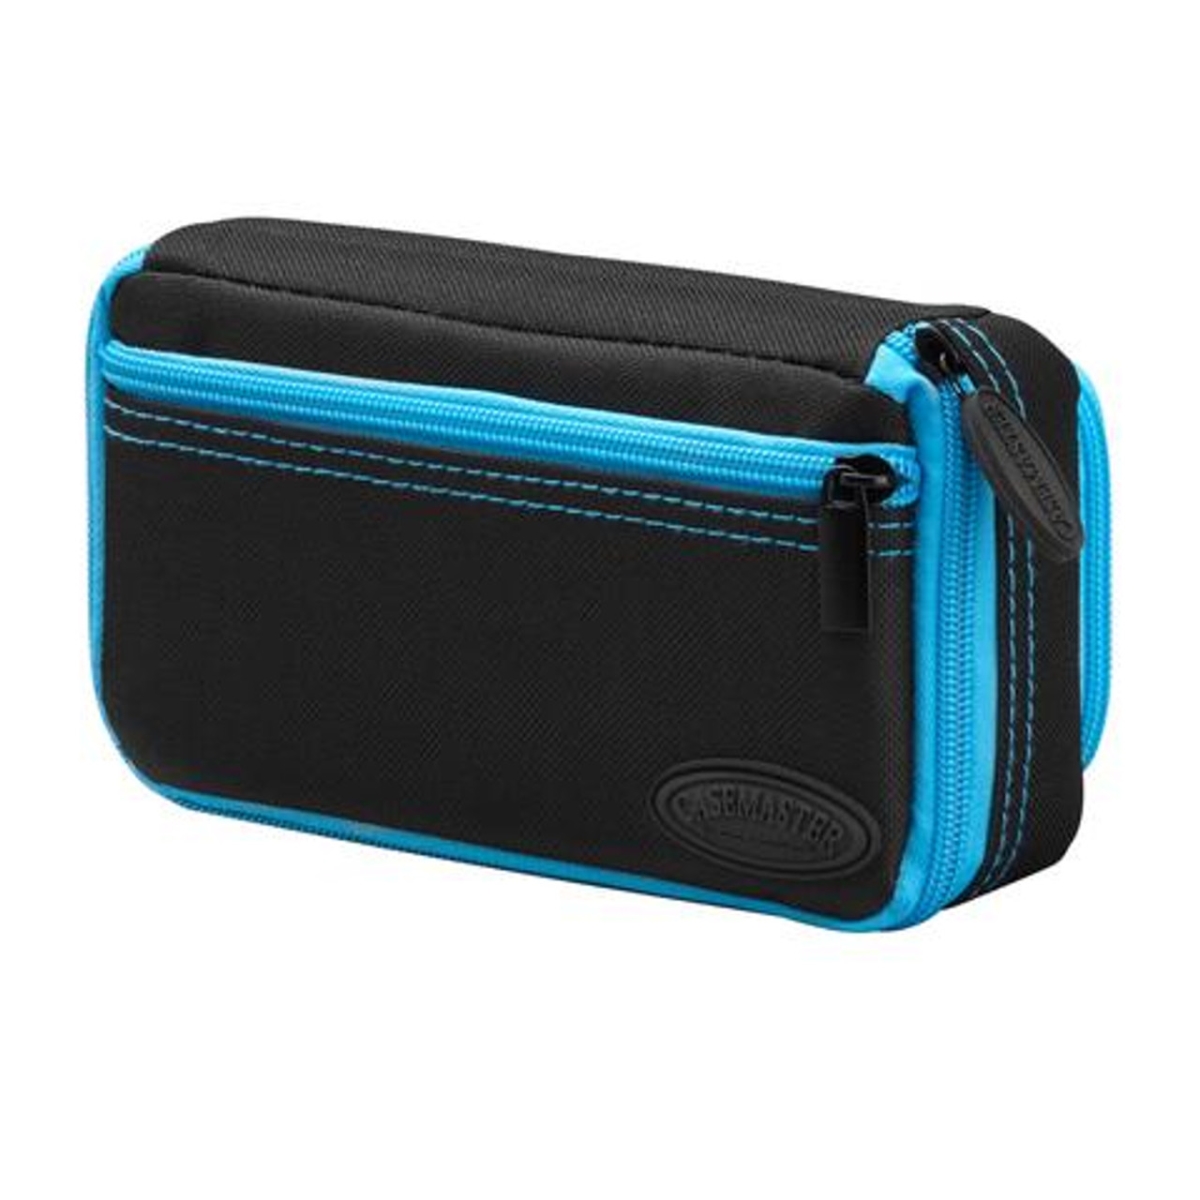 Picture of Casemaster 36-0701-03 Plazma Plus Dart Case with Zipper & Phone Pocket&#44; Black & Blue - 3 Darts